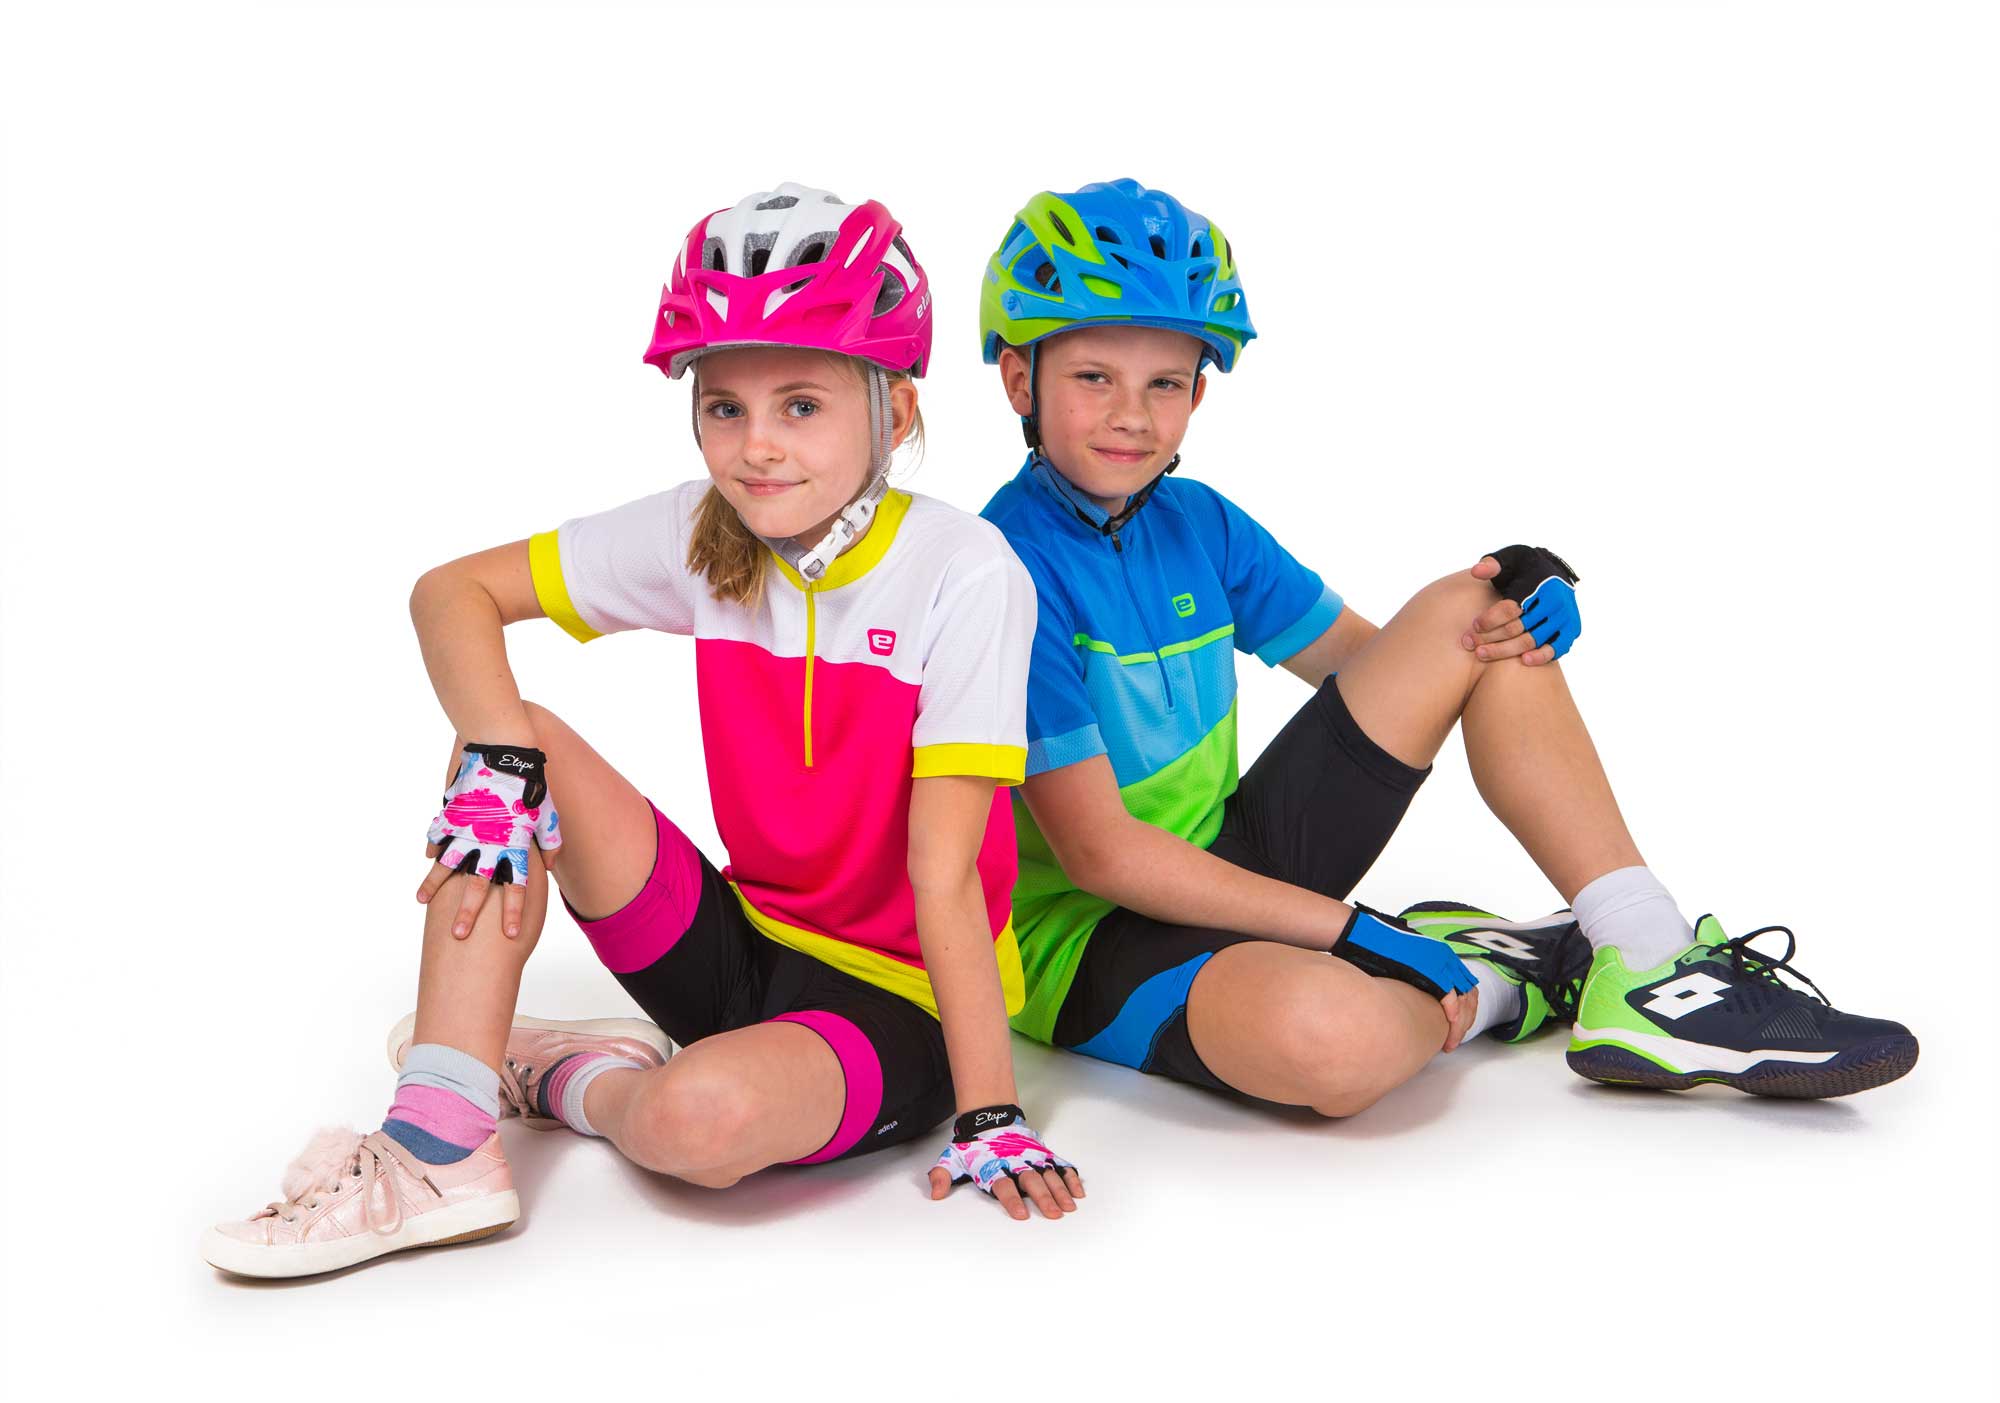 Kids' cycling pants